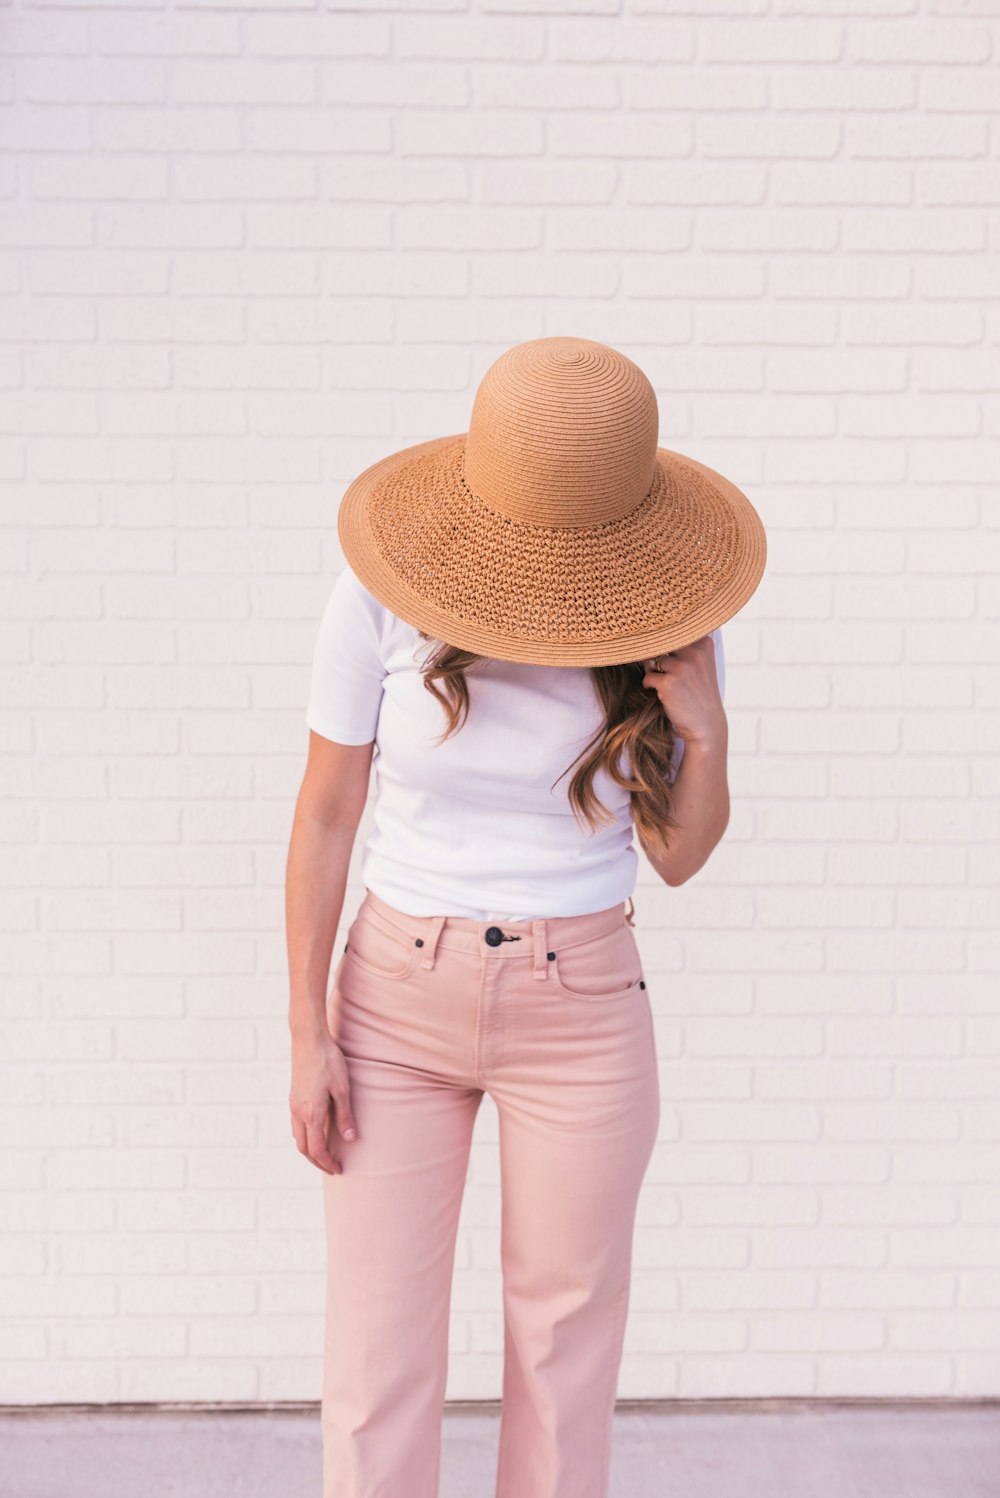 Woman wearing white shirt, pink pants, and brown sun hat photo – Free Love  Image on Unsplash